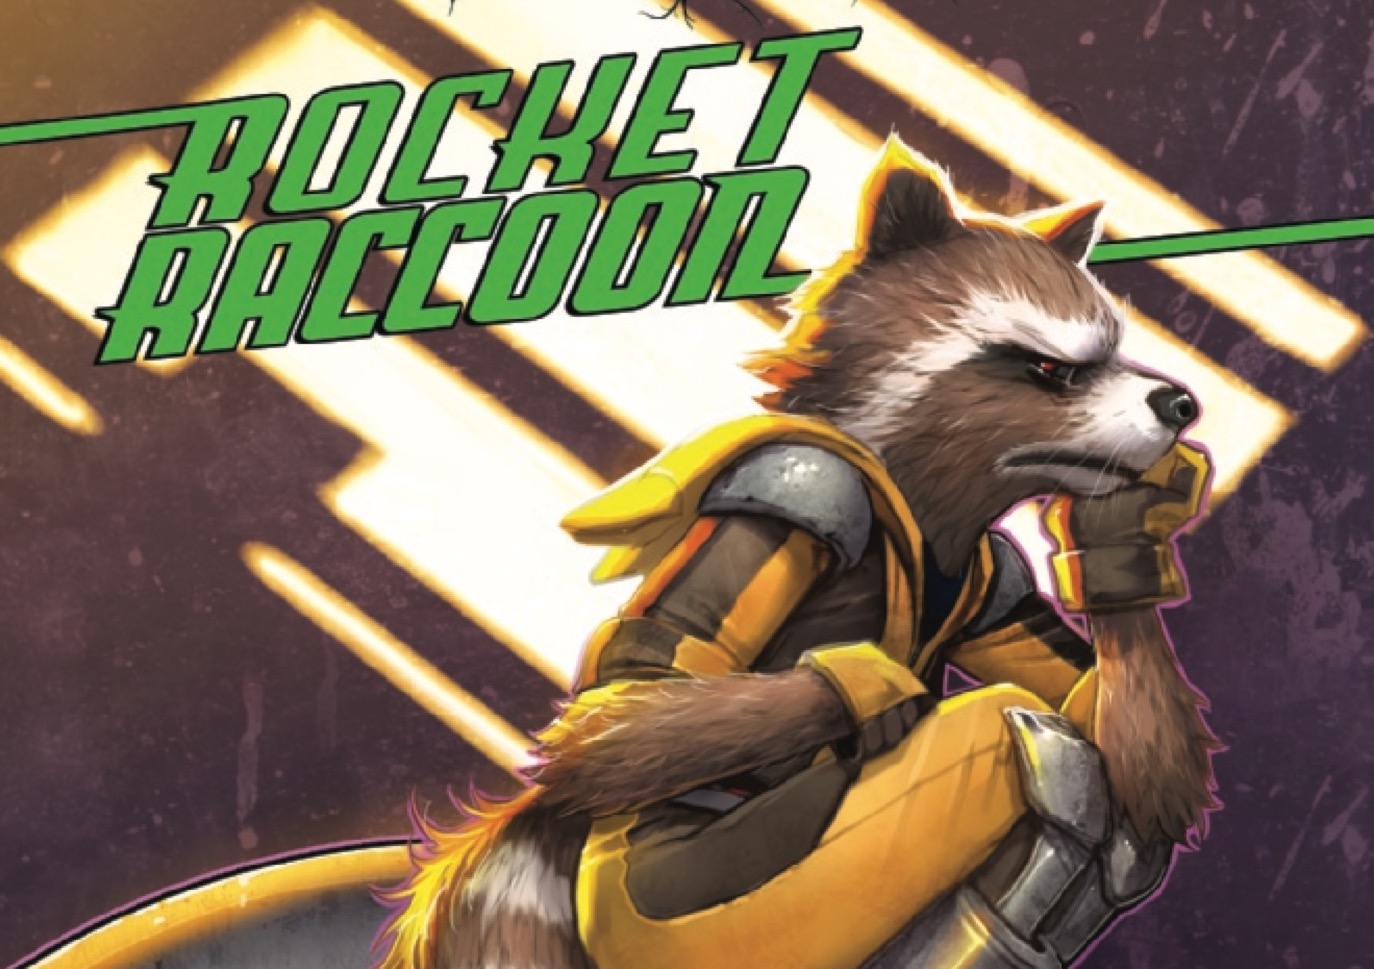 Marvel Preview: Rocket Raccoon #4